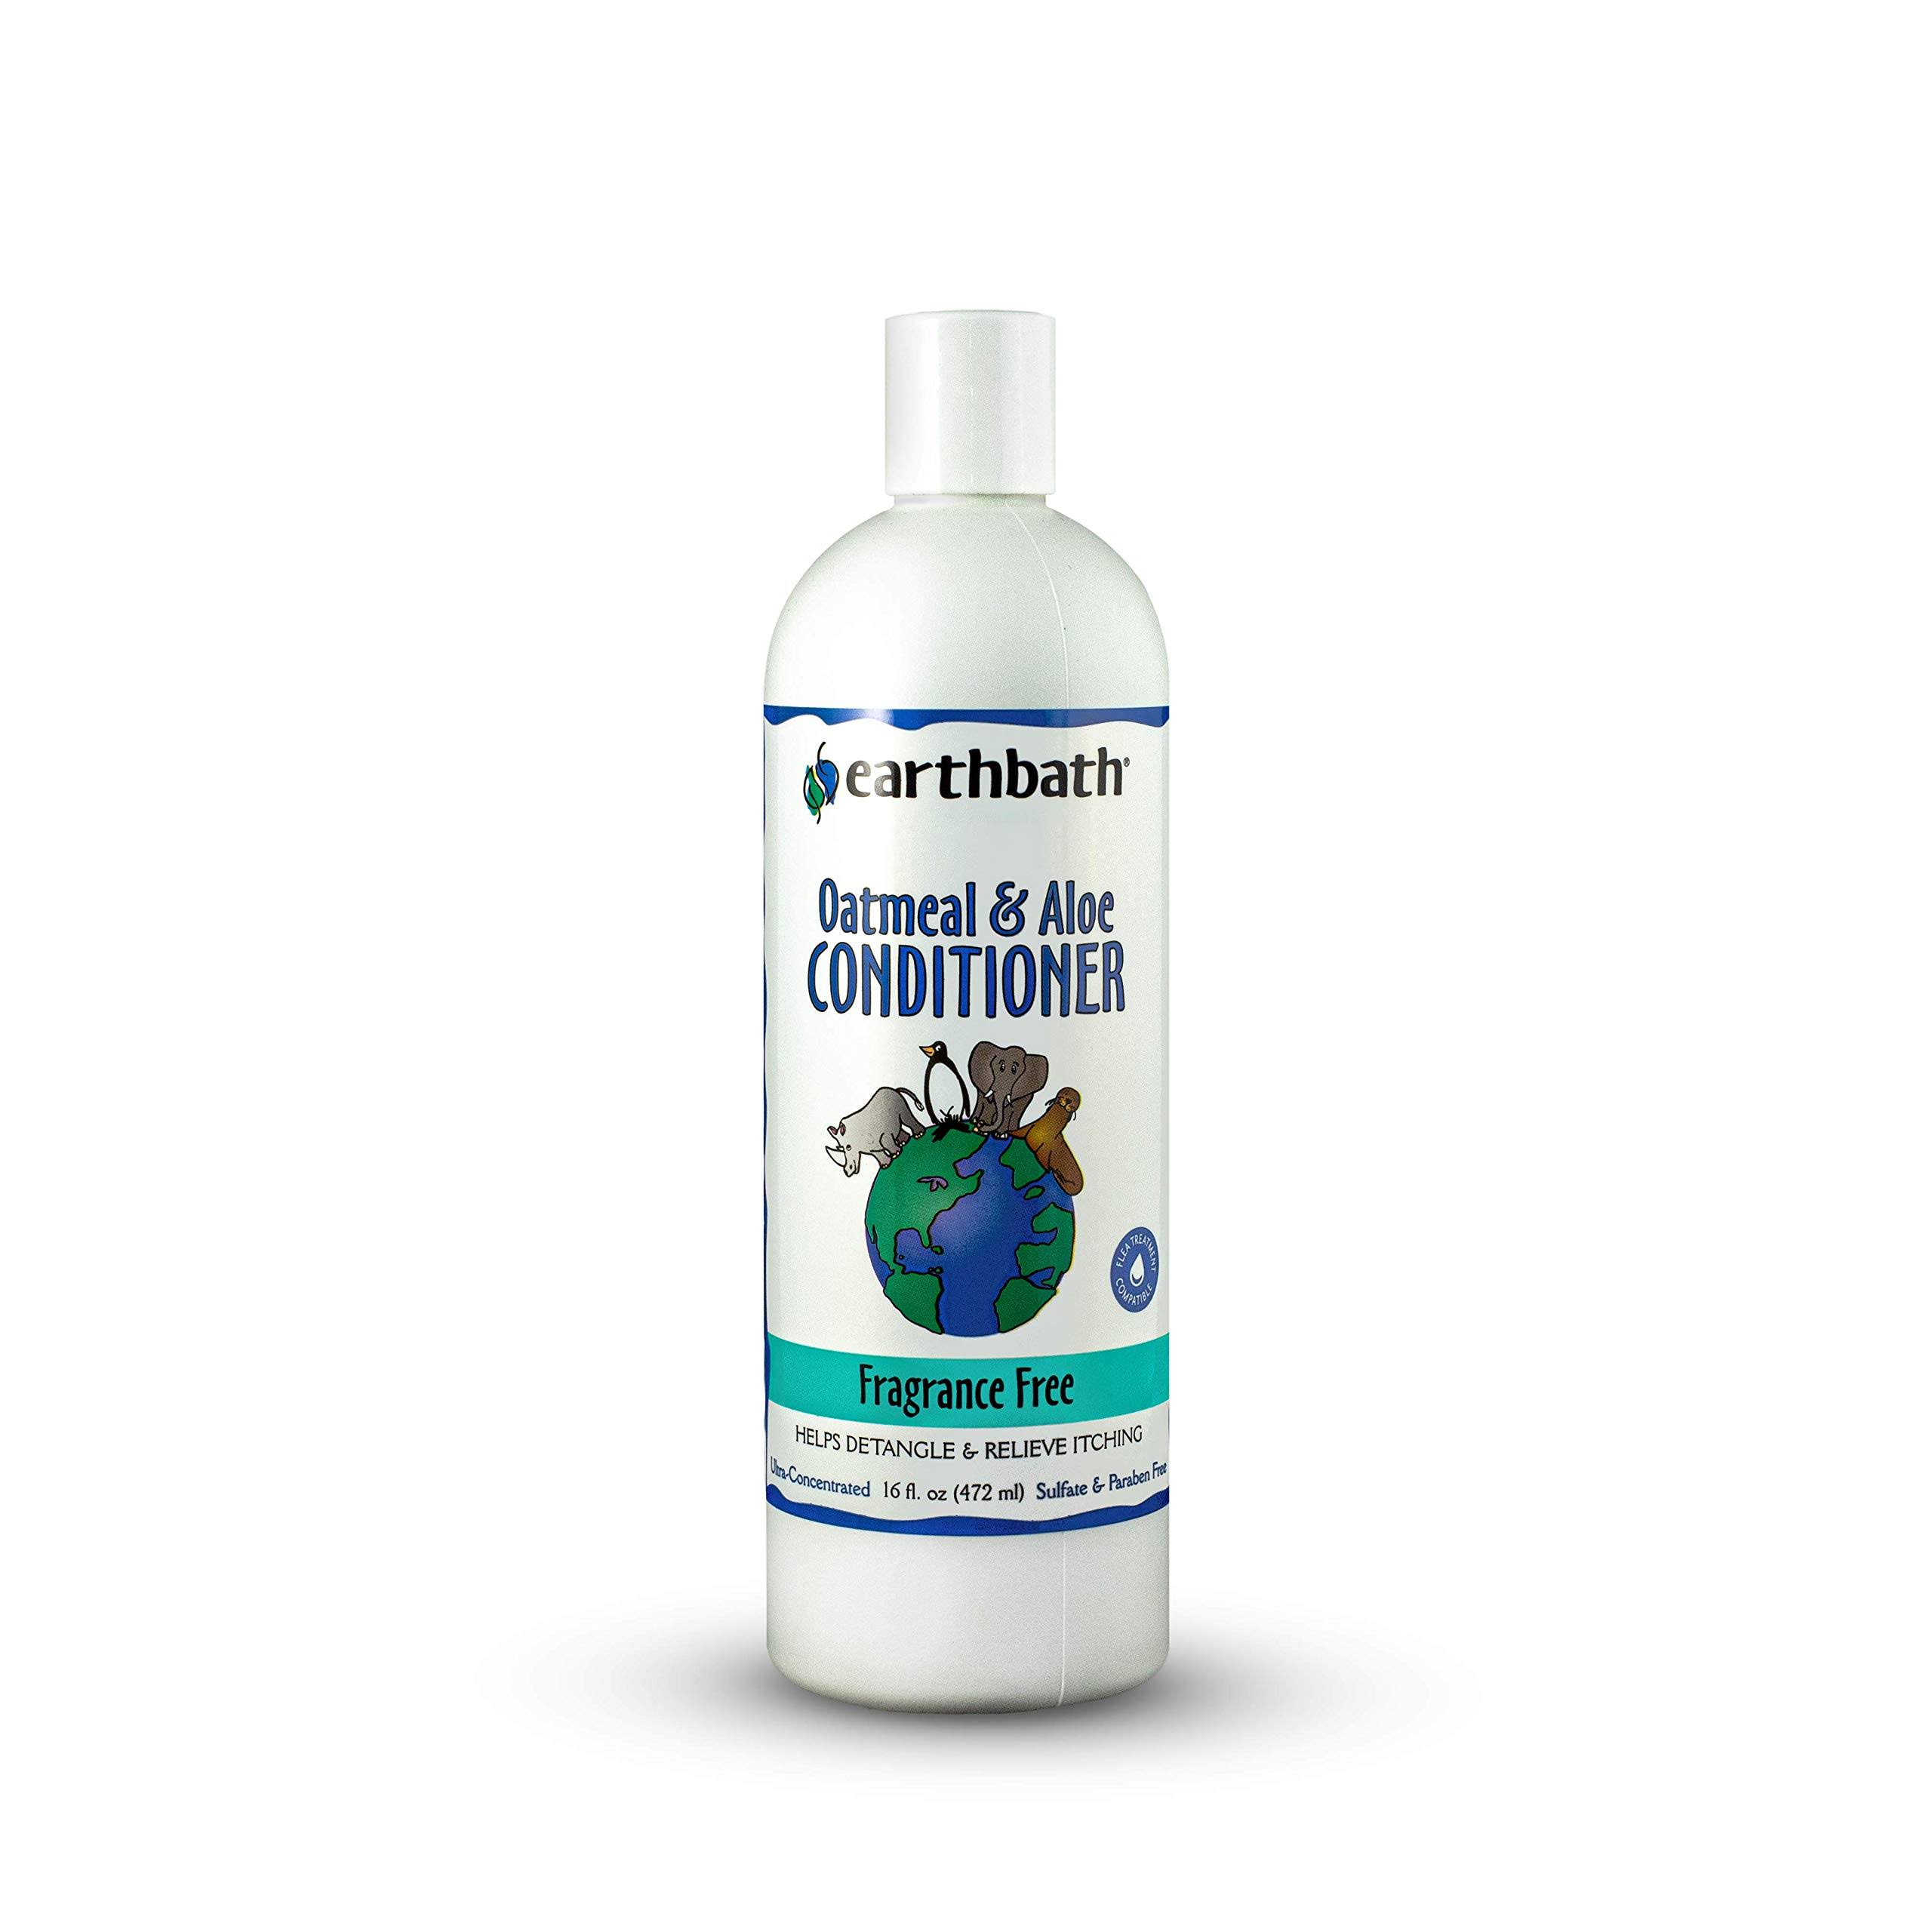 Earthbath Dog Conditioner - Oatmeal and Aloe, Fragrance Free, 16oz